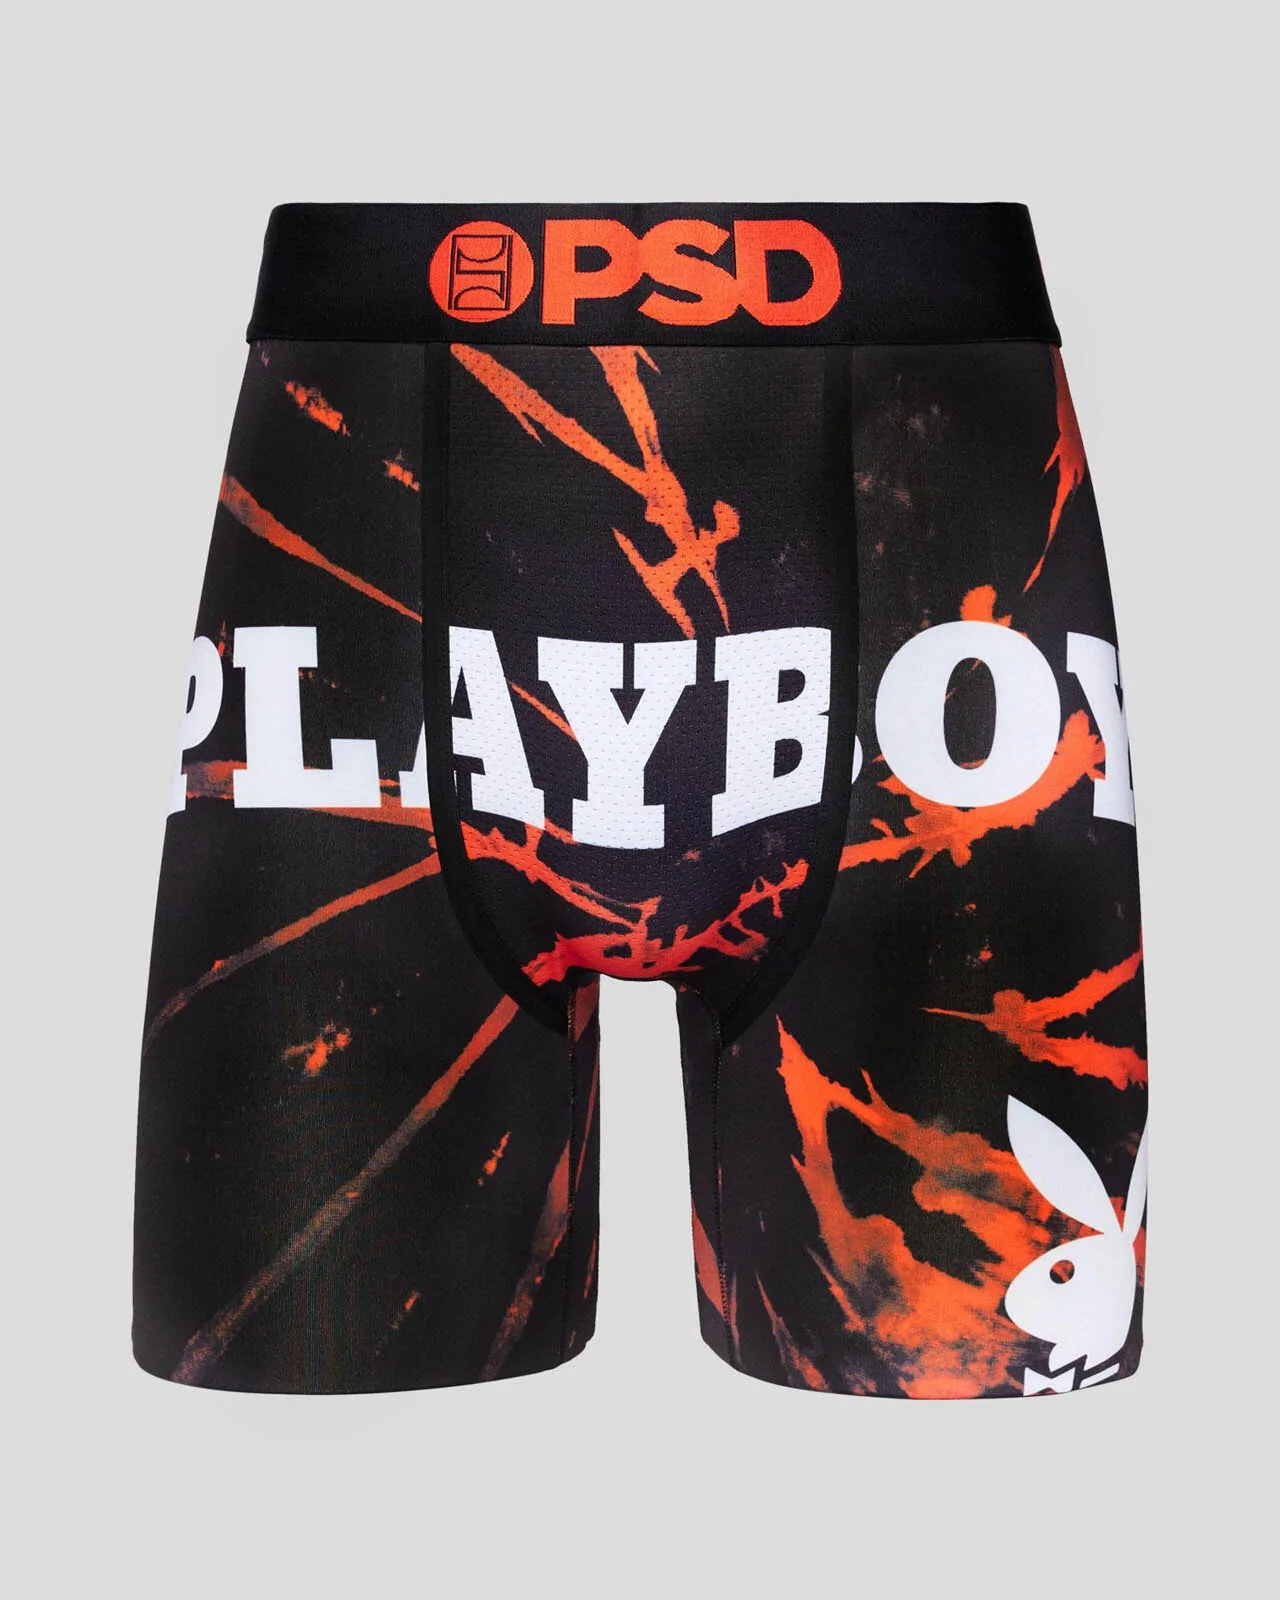 PSD Playboy Boxer Brief